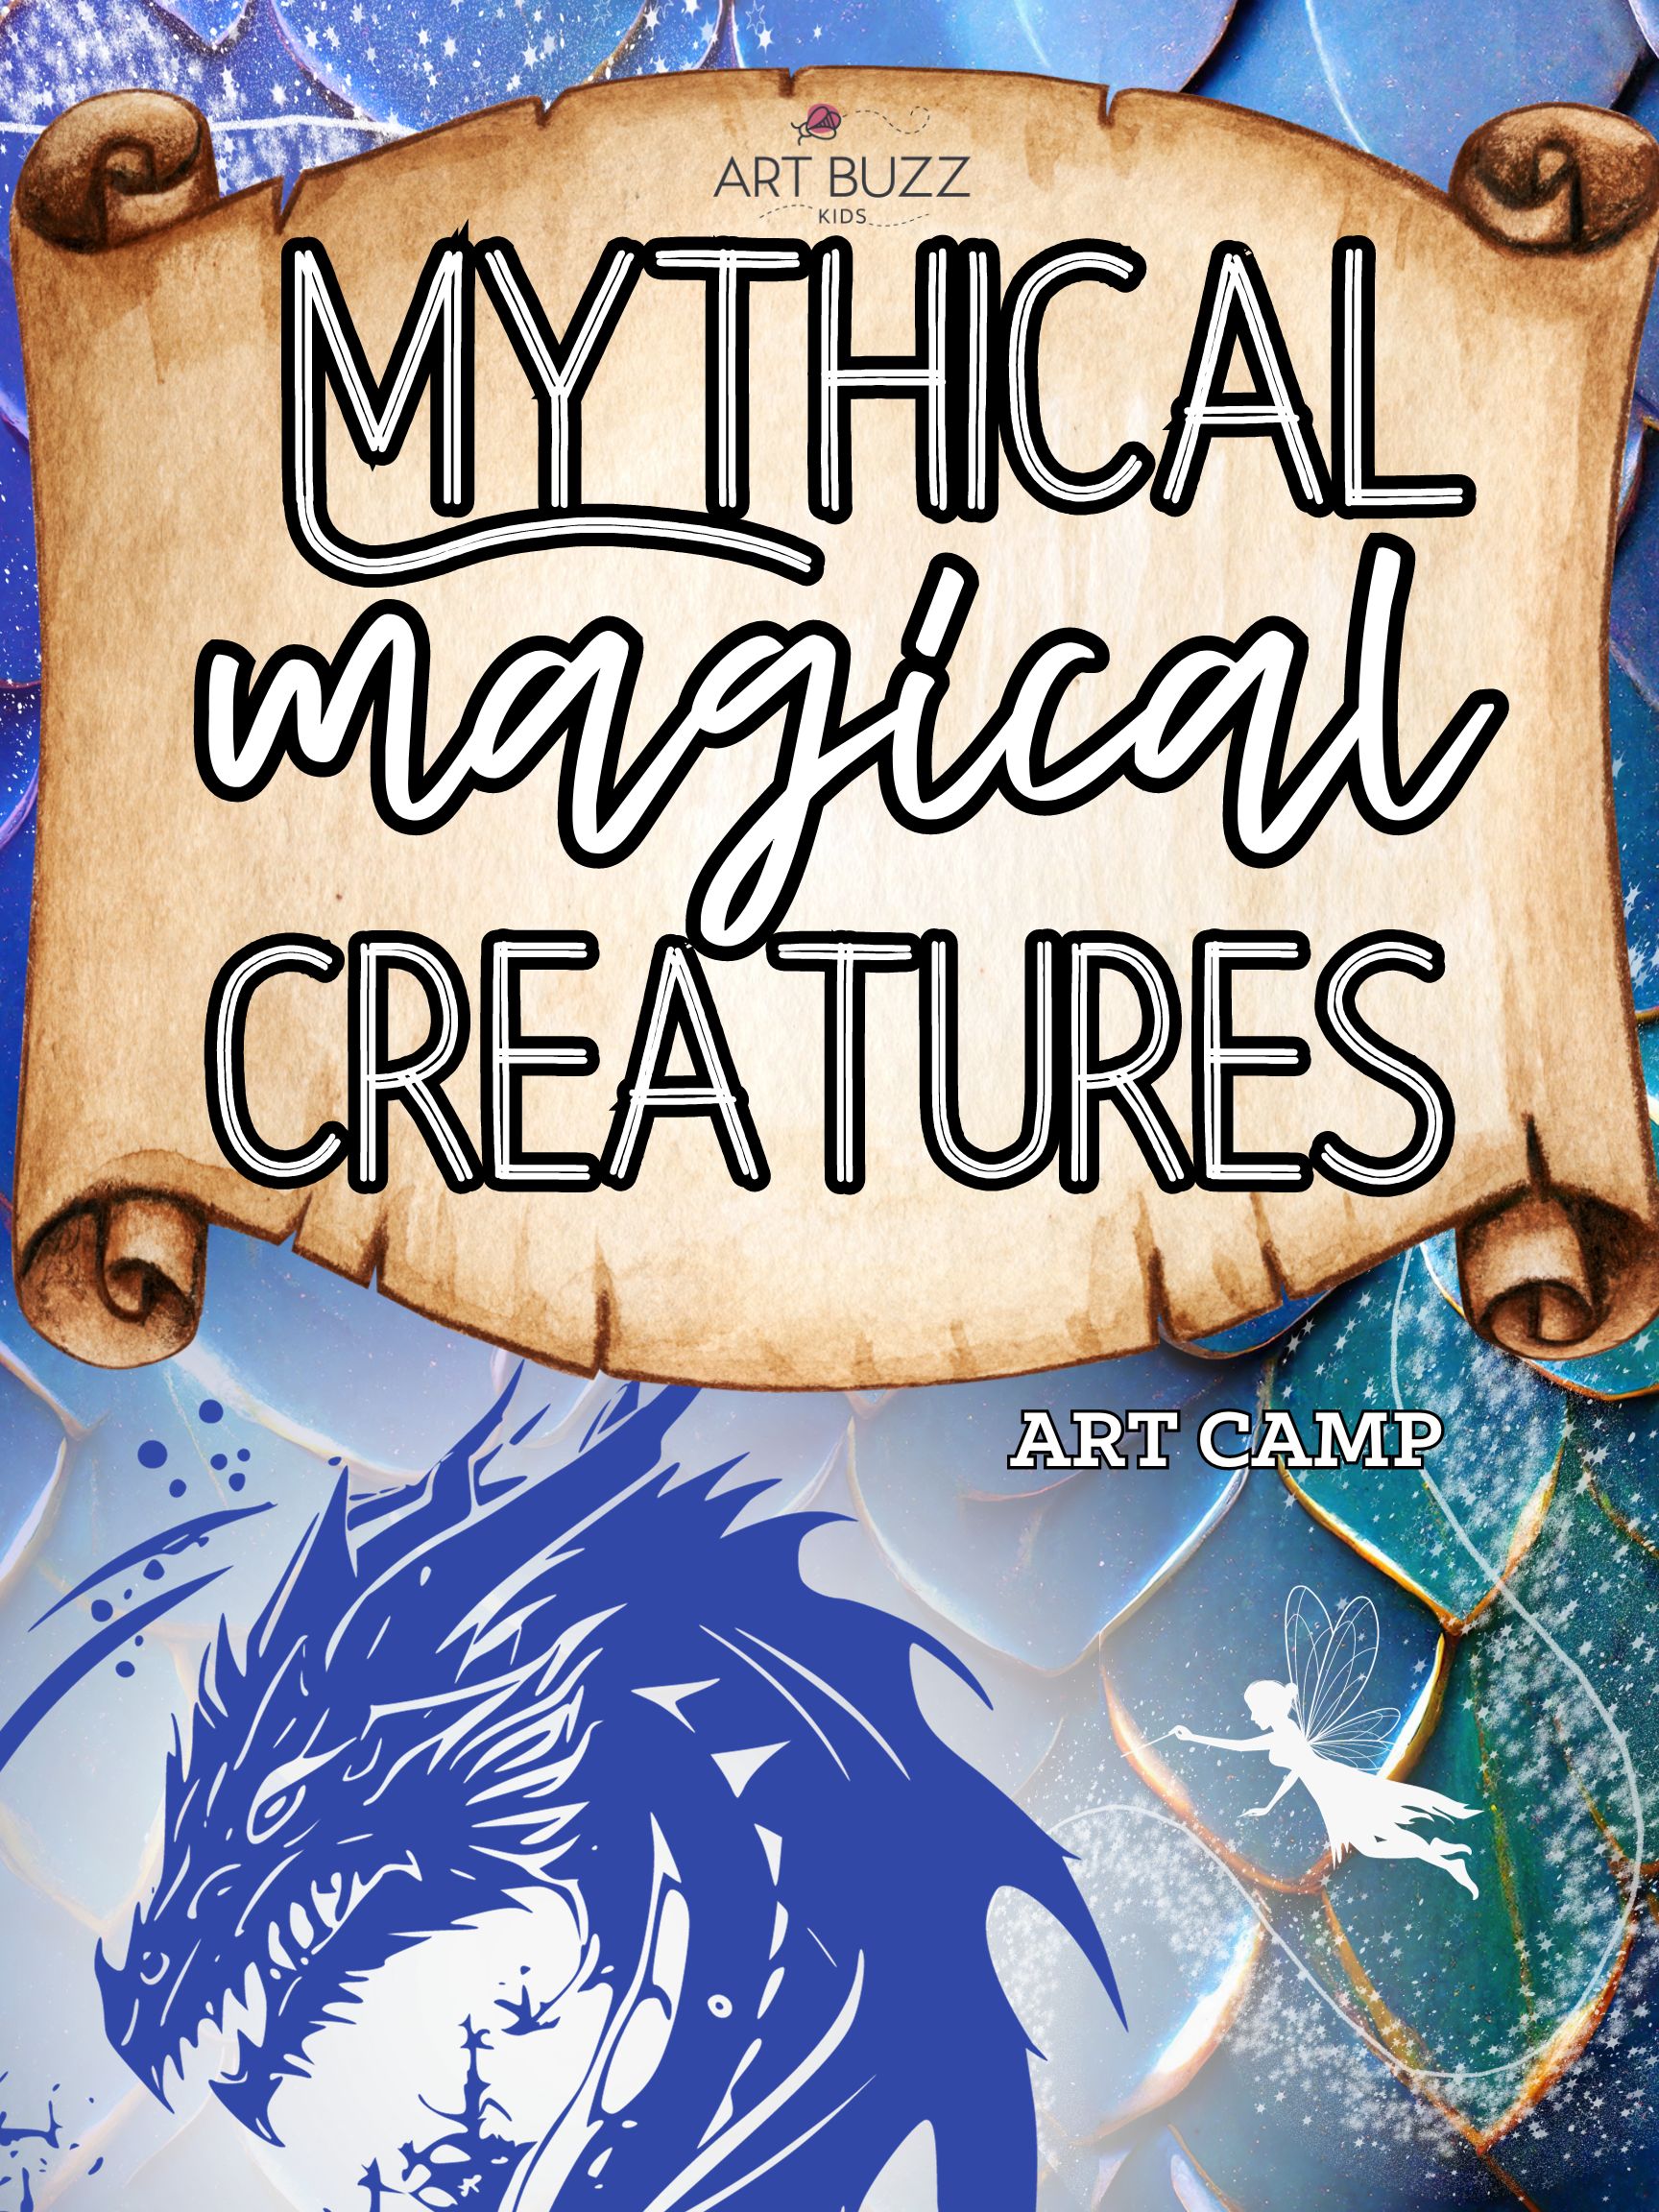 BRAND NEW: Mythical Magical Creatures Art Buzz Kids Art Camp! 10AM-2PM